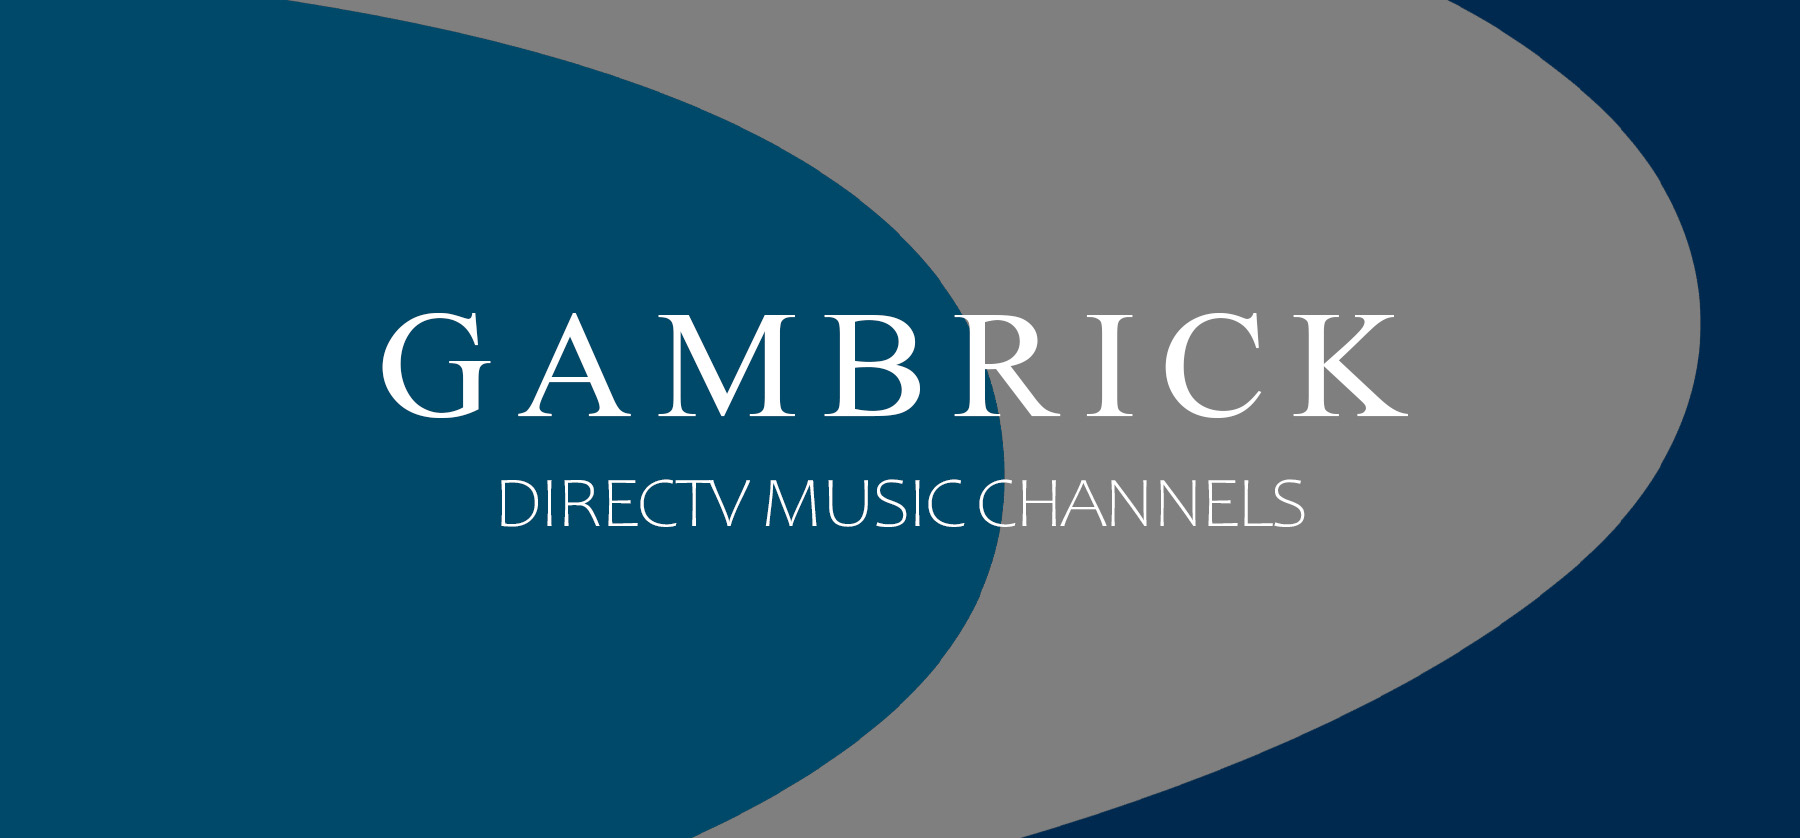 DirecTV music channels banner 1.0